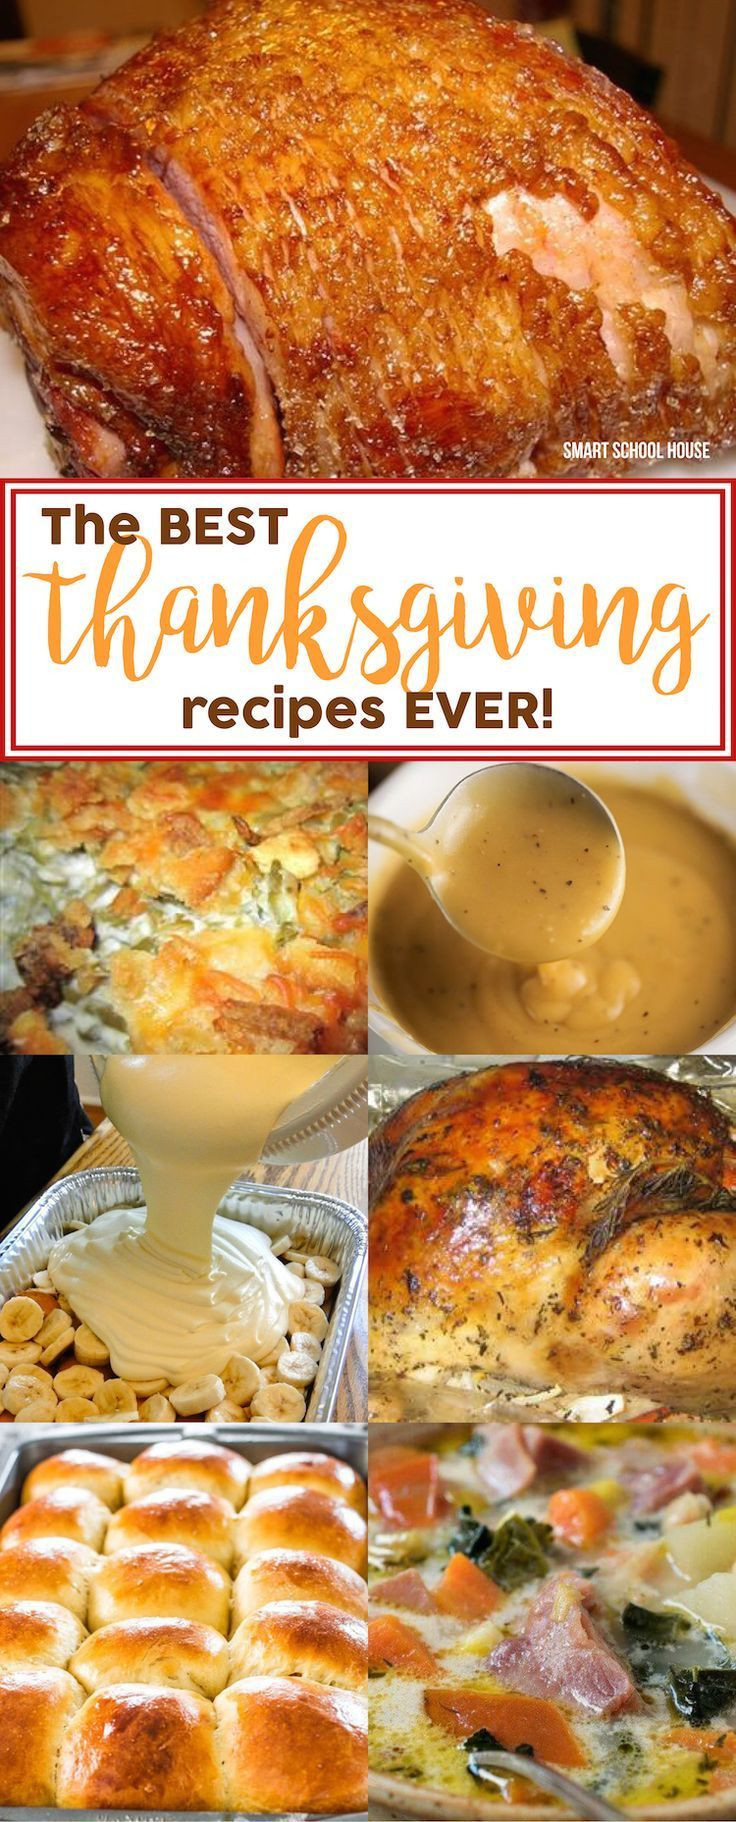 Best Thanksgiving Turkey Recipes Ever
 The BEST Thanksgiving Recipes EVER